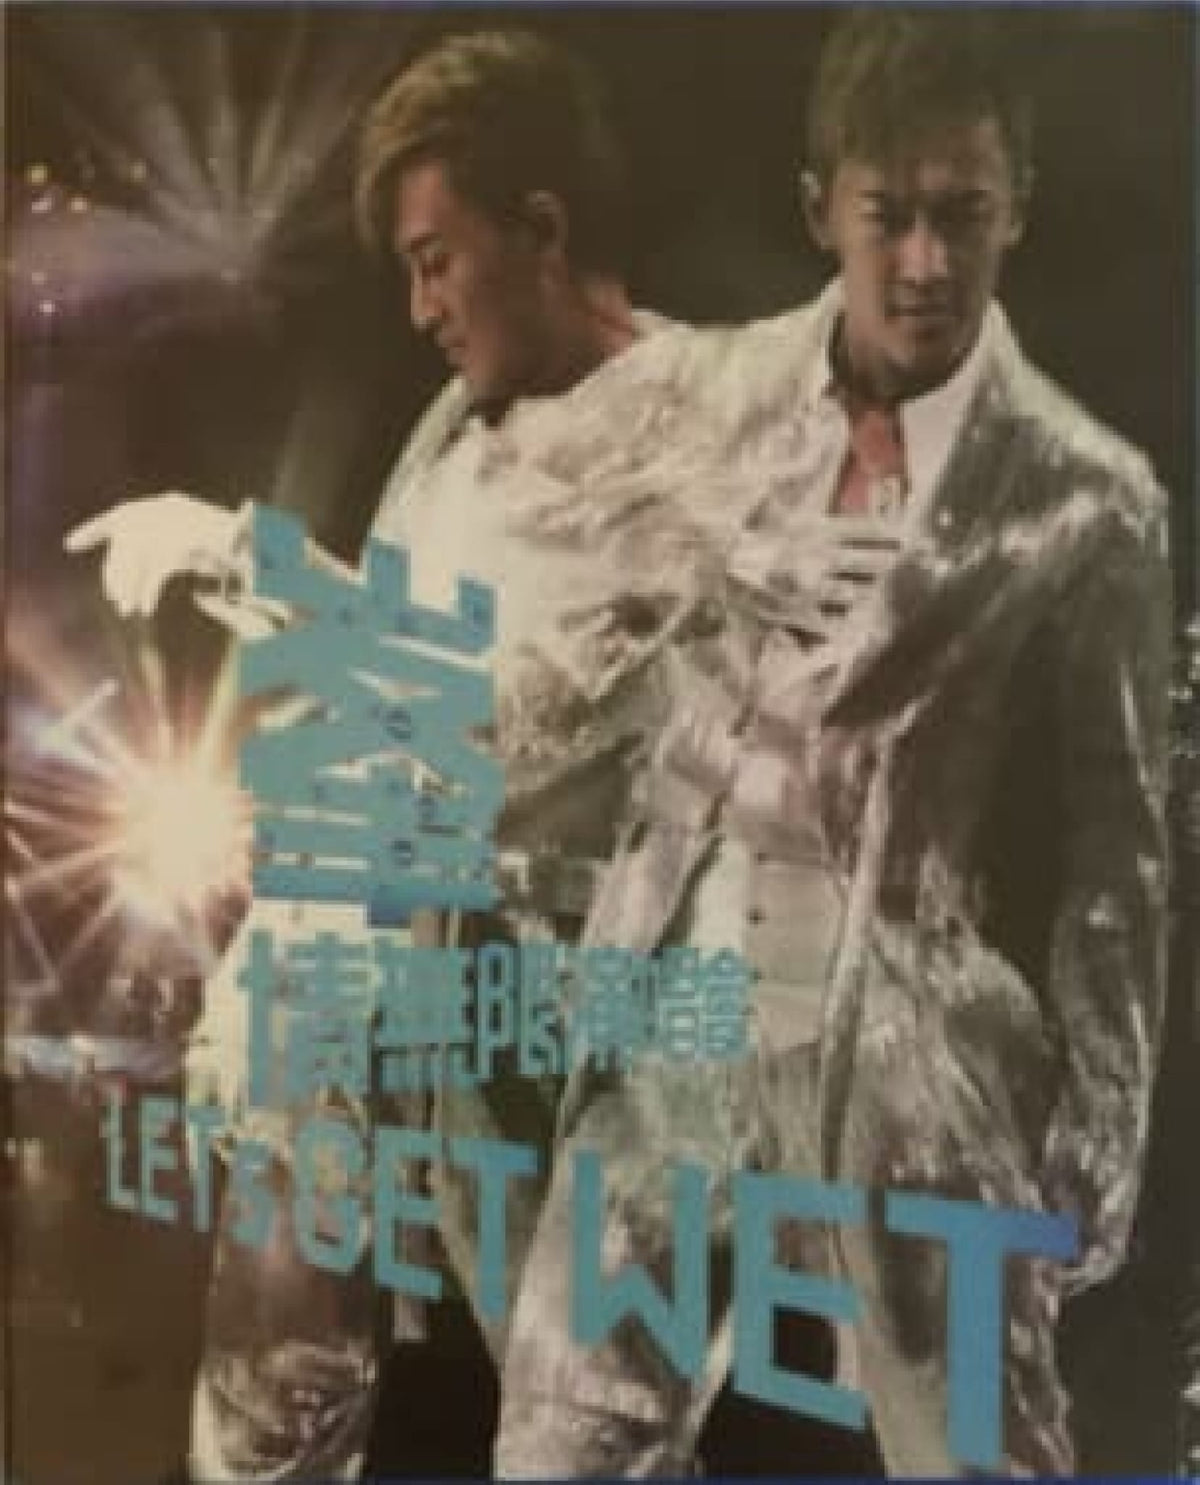 林峯 - Let's Get Wet Live Karaoke Blu-ray (送海報)